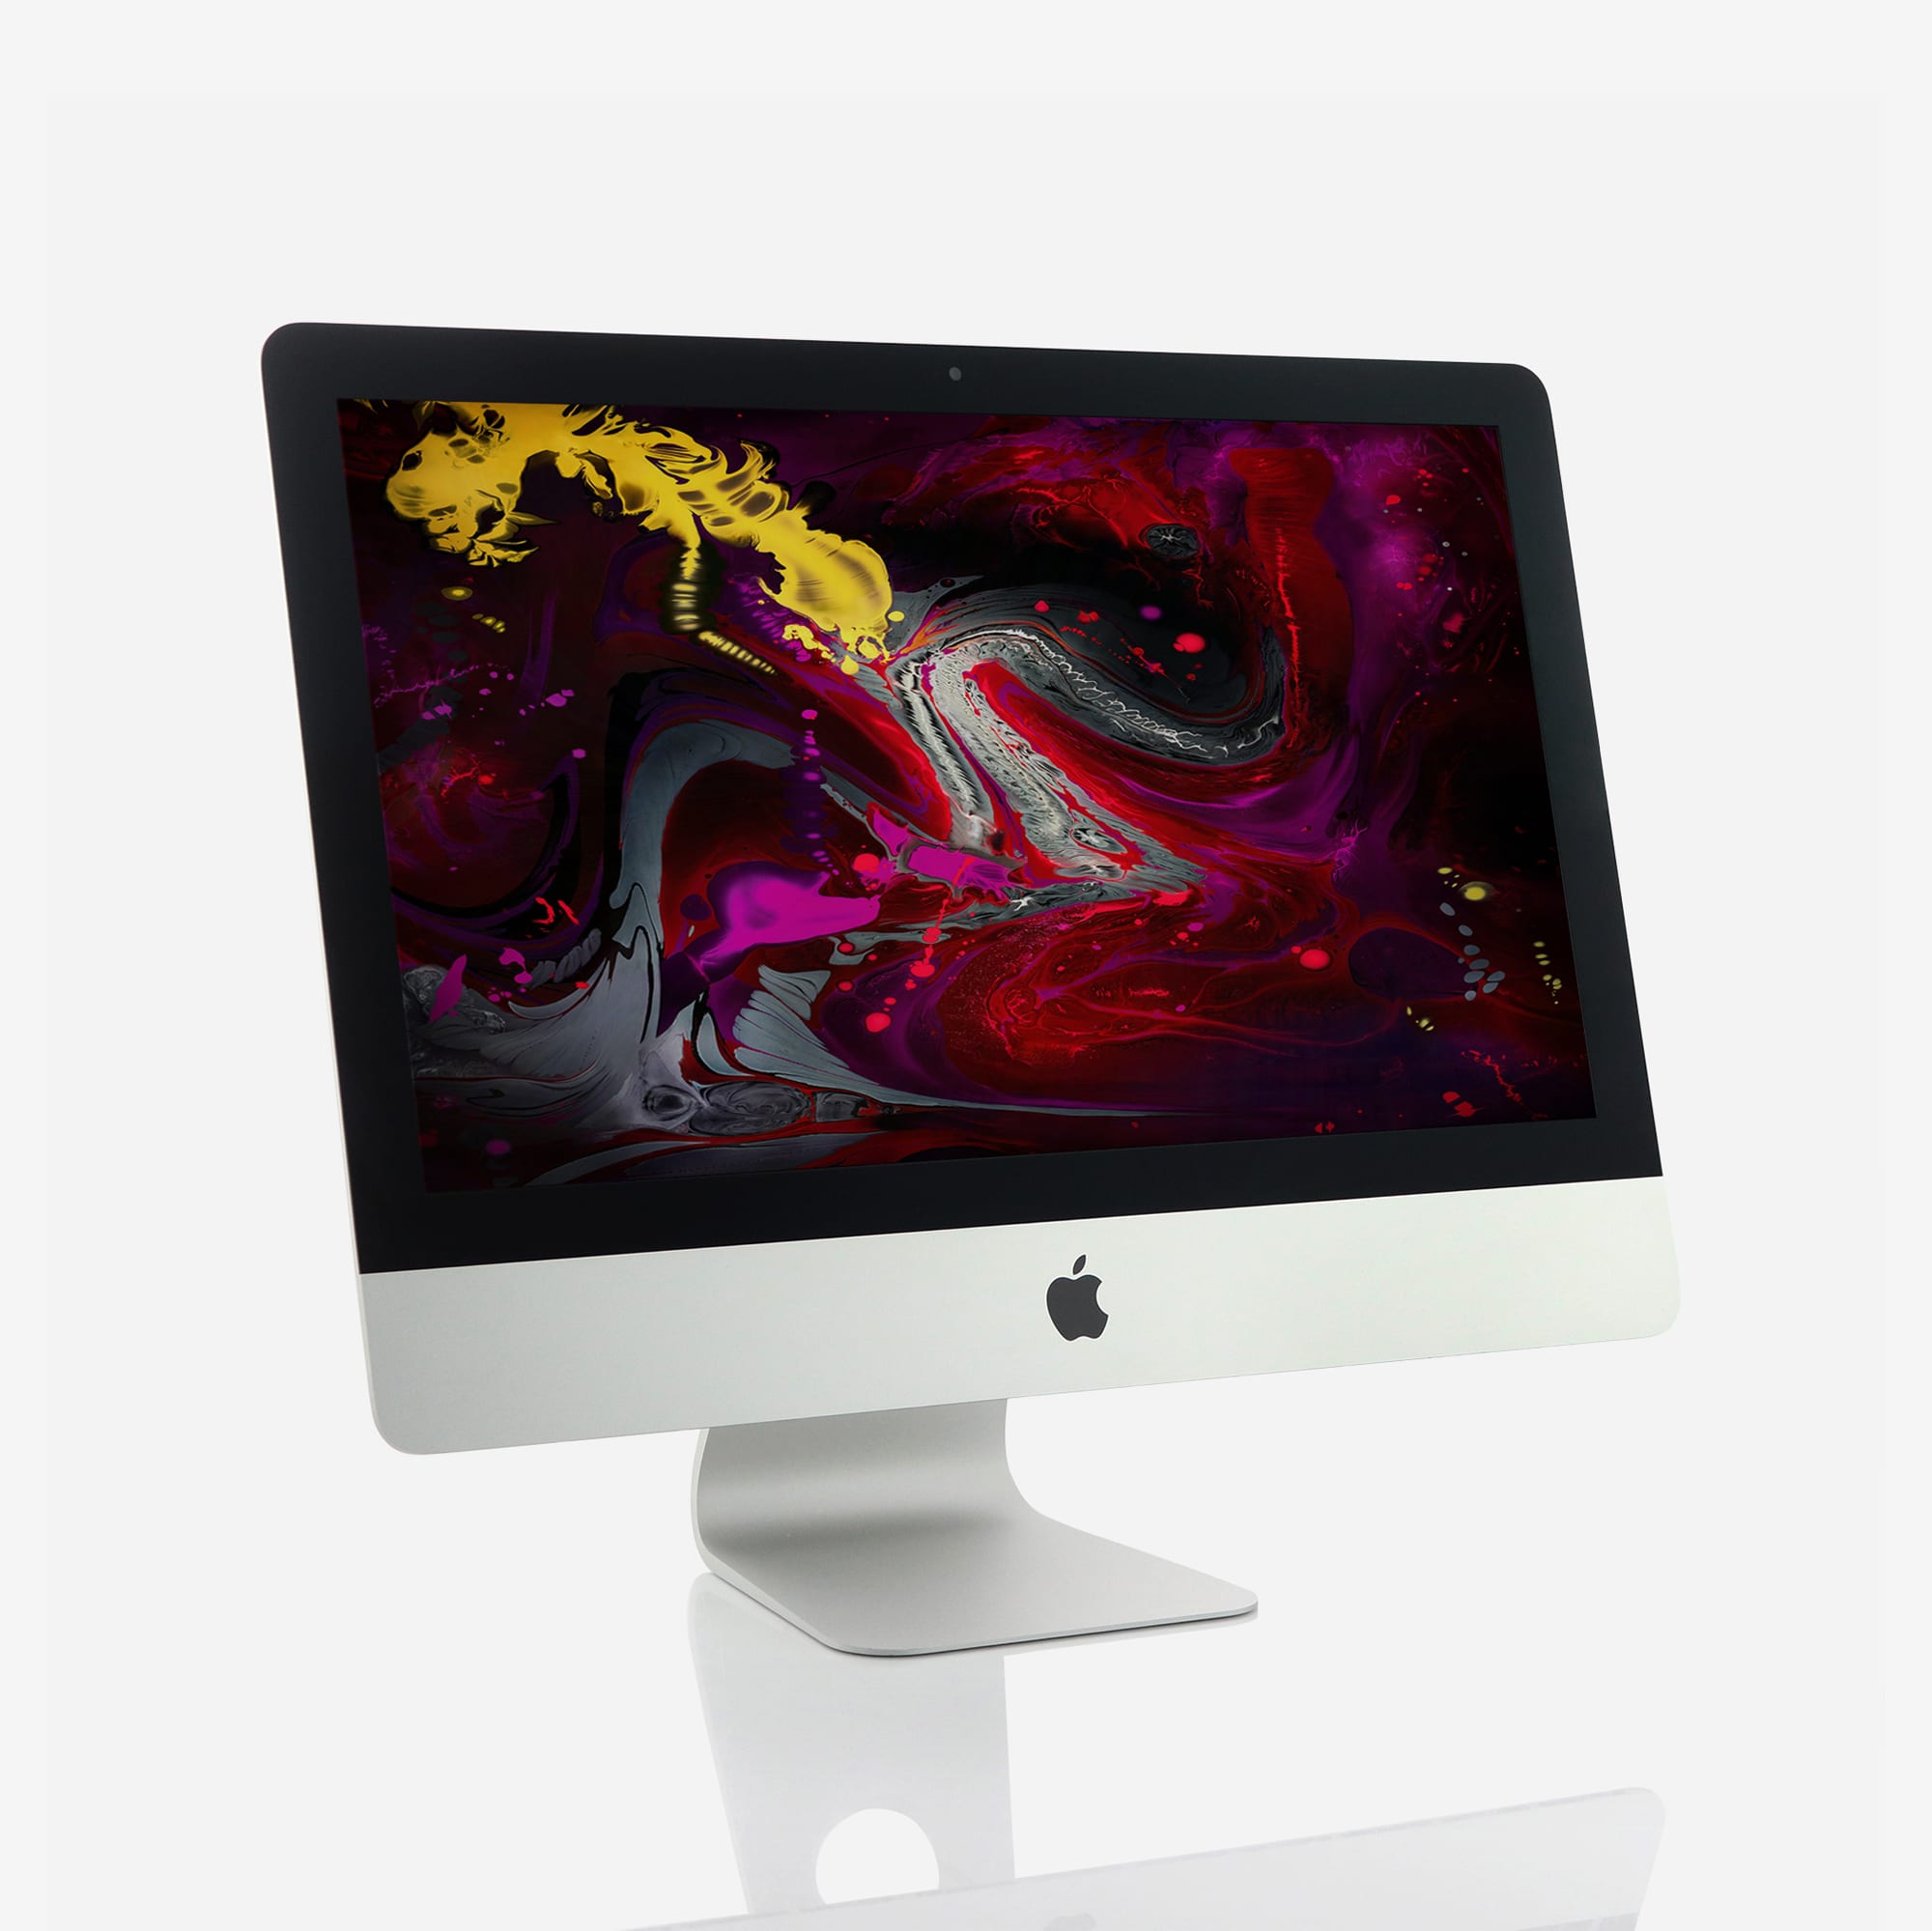 1 x Apple iMac Slim 21.5 Inch Intel Core i3 3.60 GHz (2019)